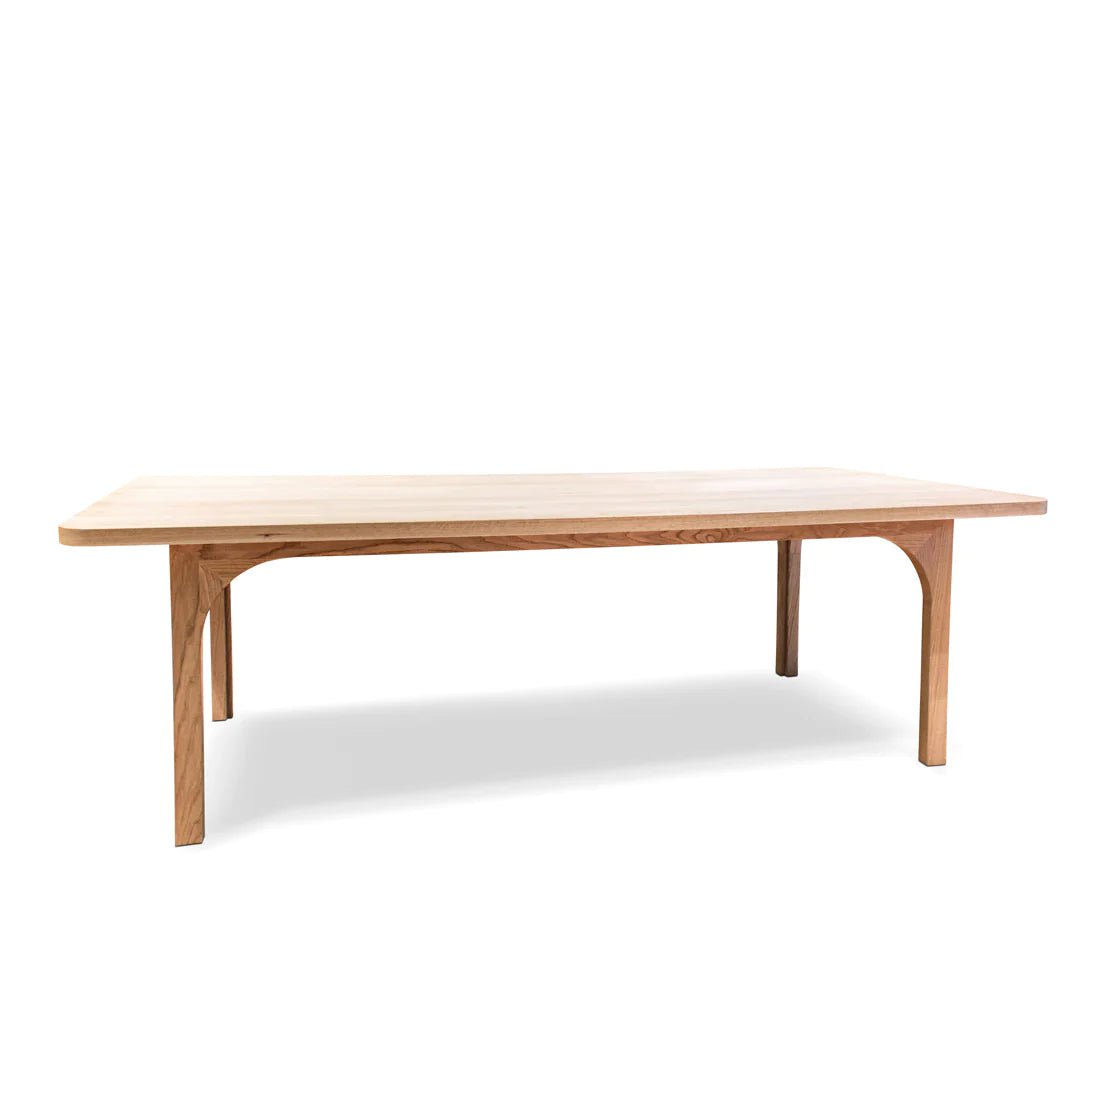 Goldfinger x Inhabit rectangular dining table